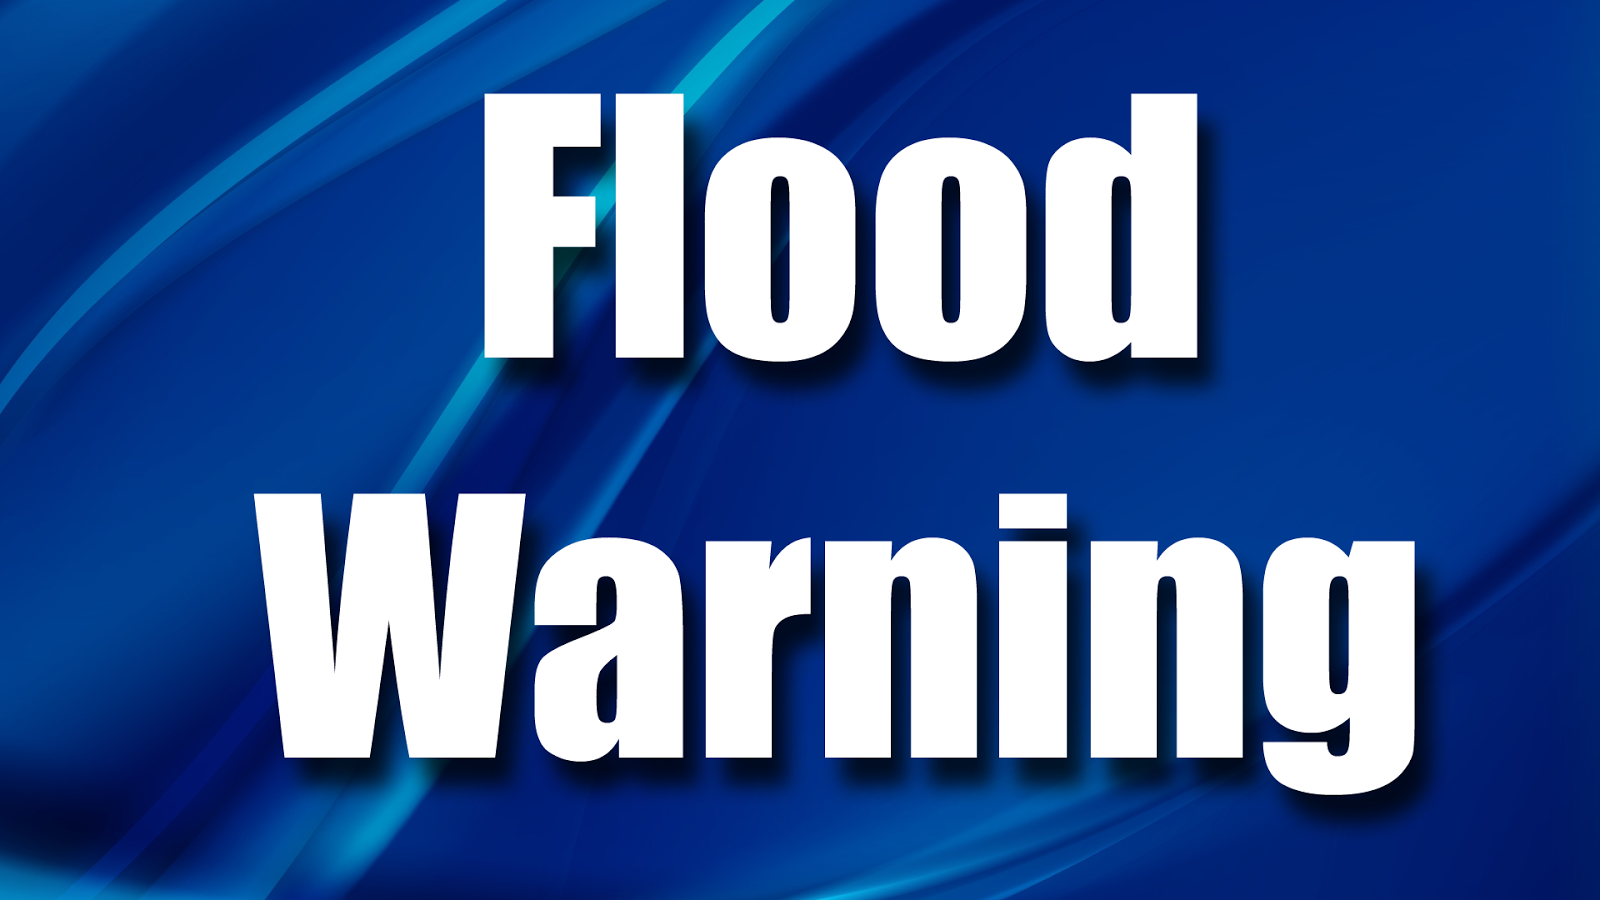 flood warning